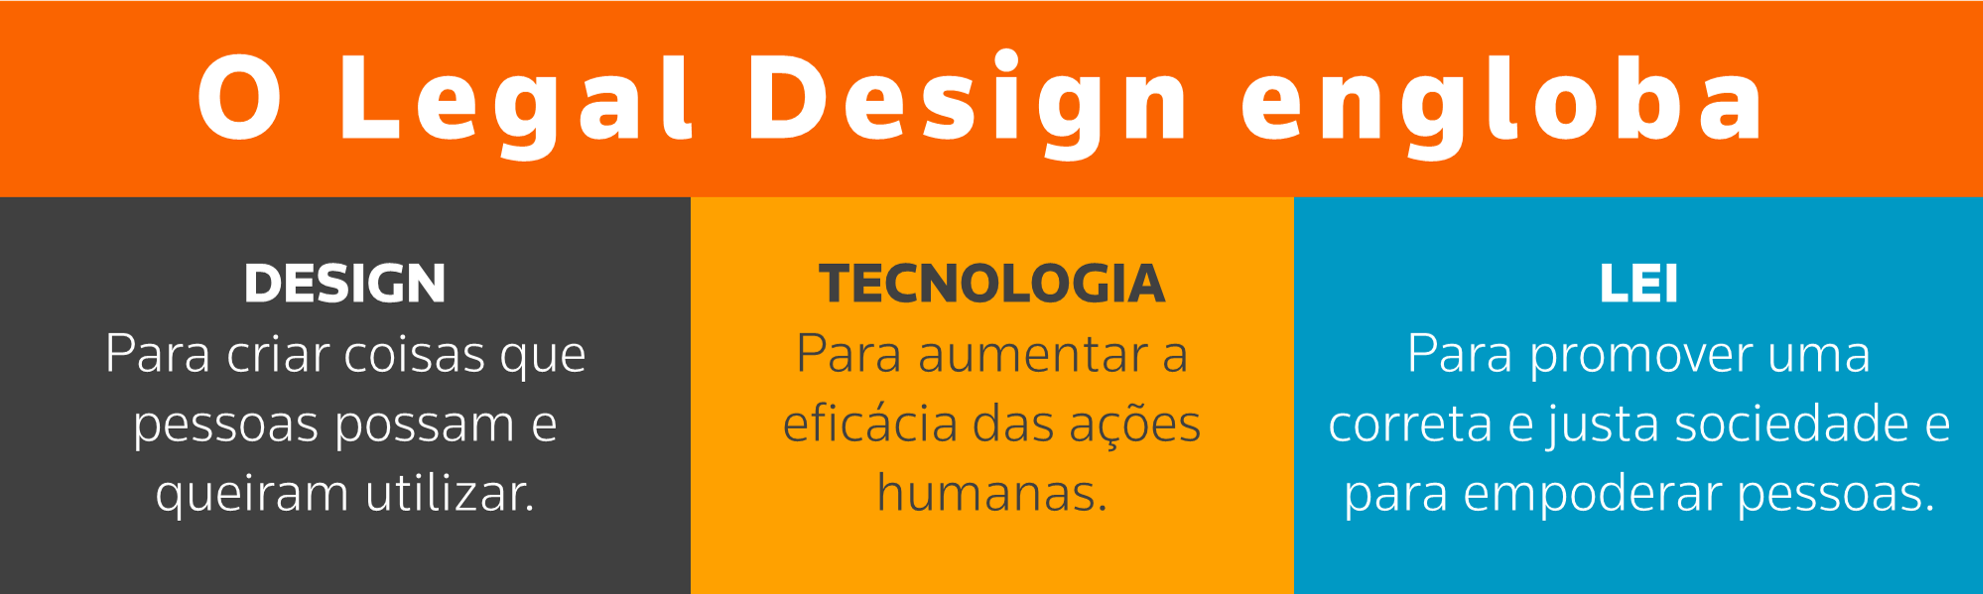 O Legal Design engloba Design, Tecnologia e Lei.